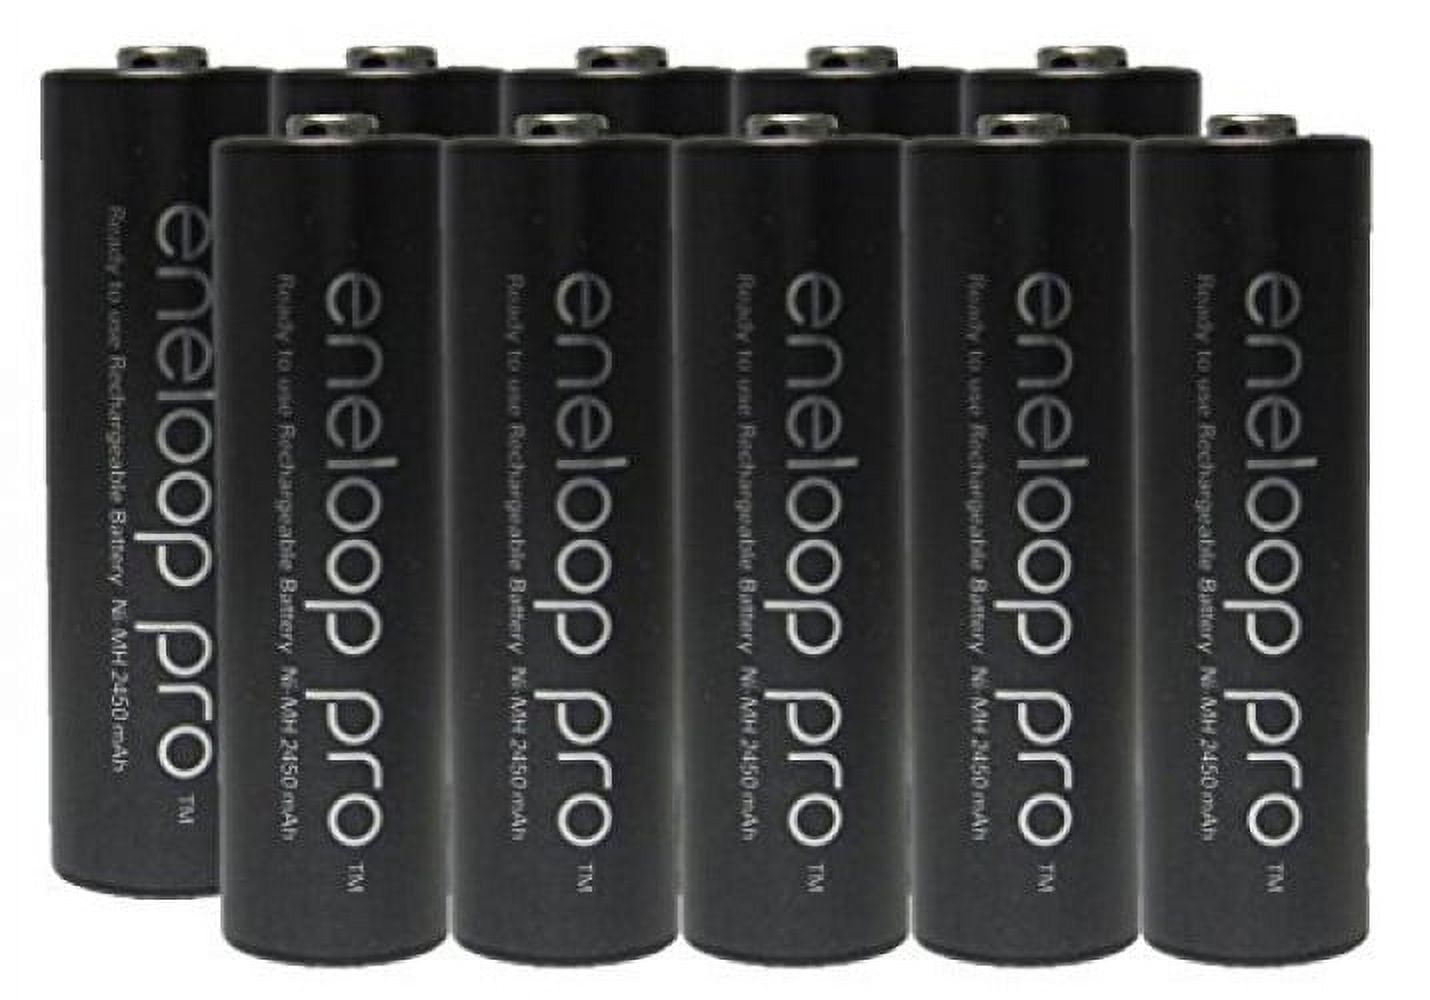 Panasonic Eneloop Pro battery review